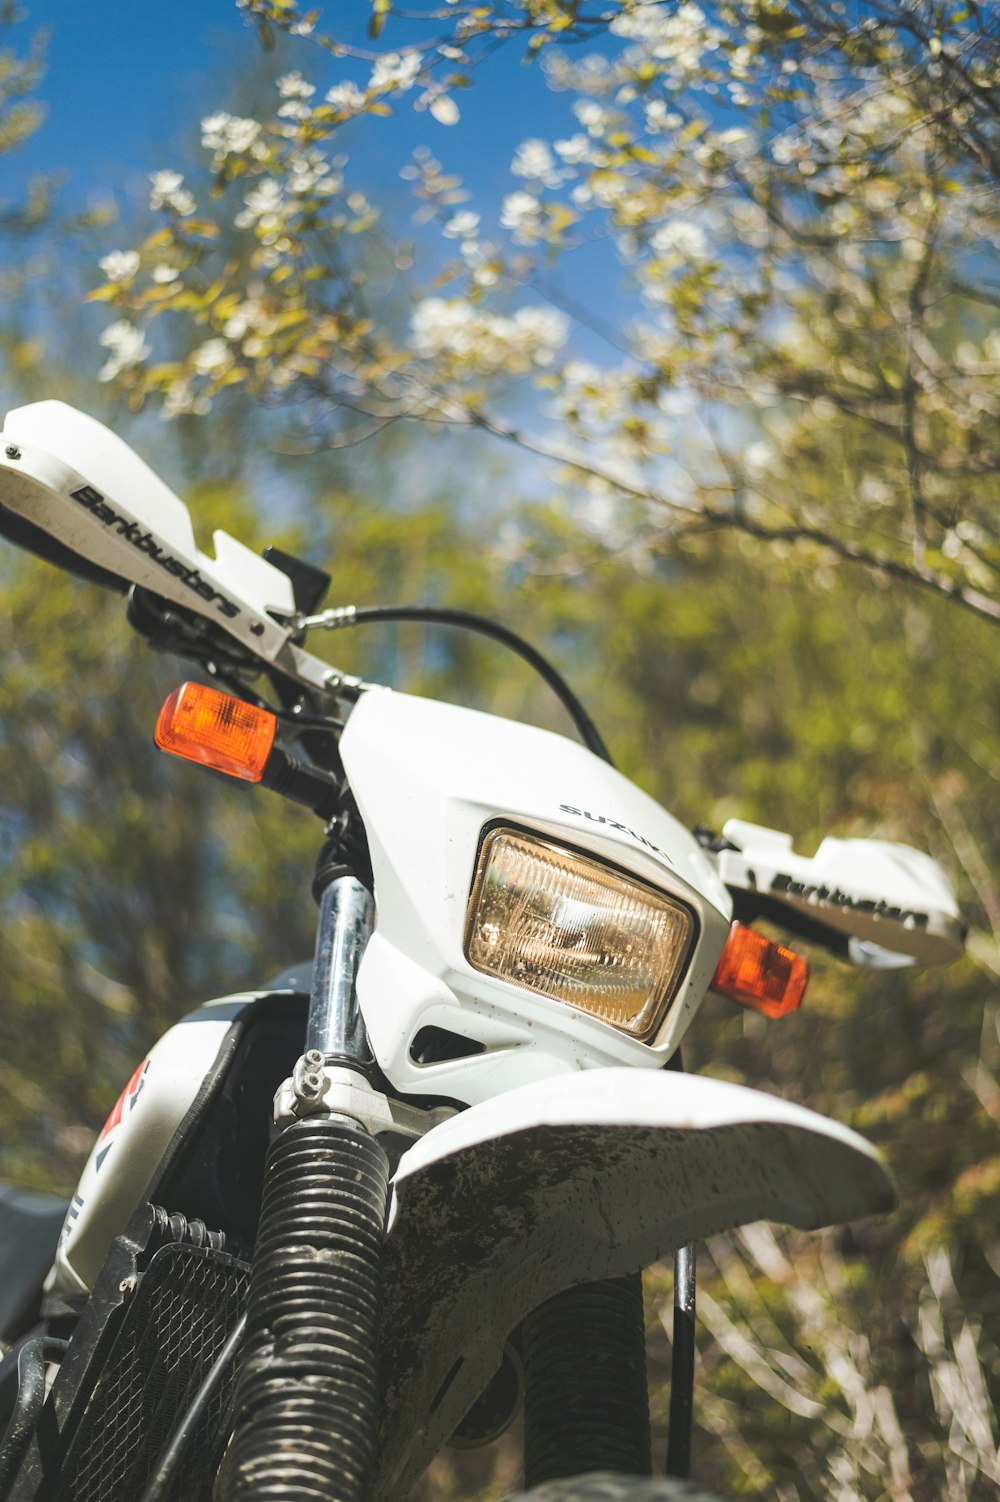 white and black honda motorcycle